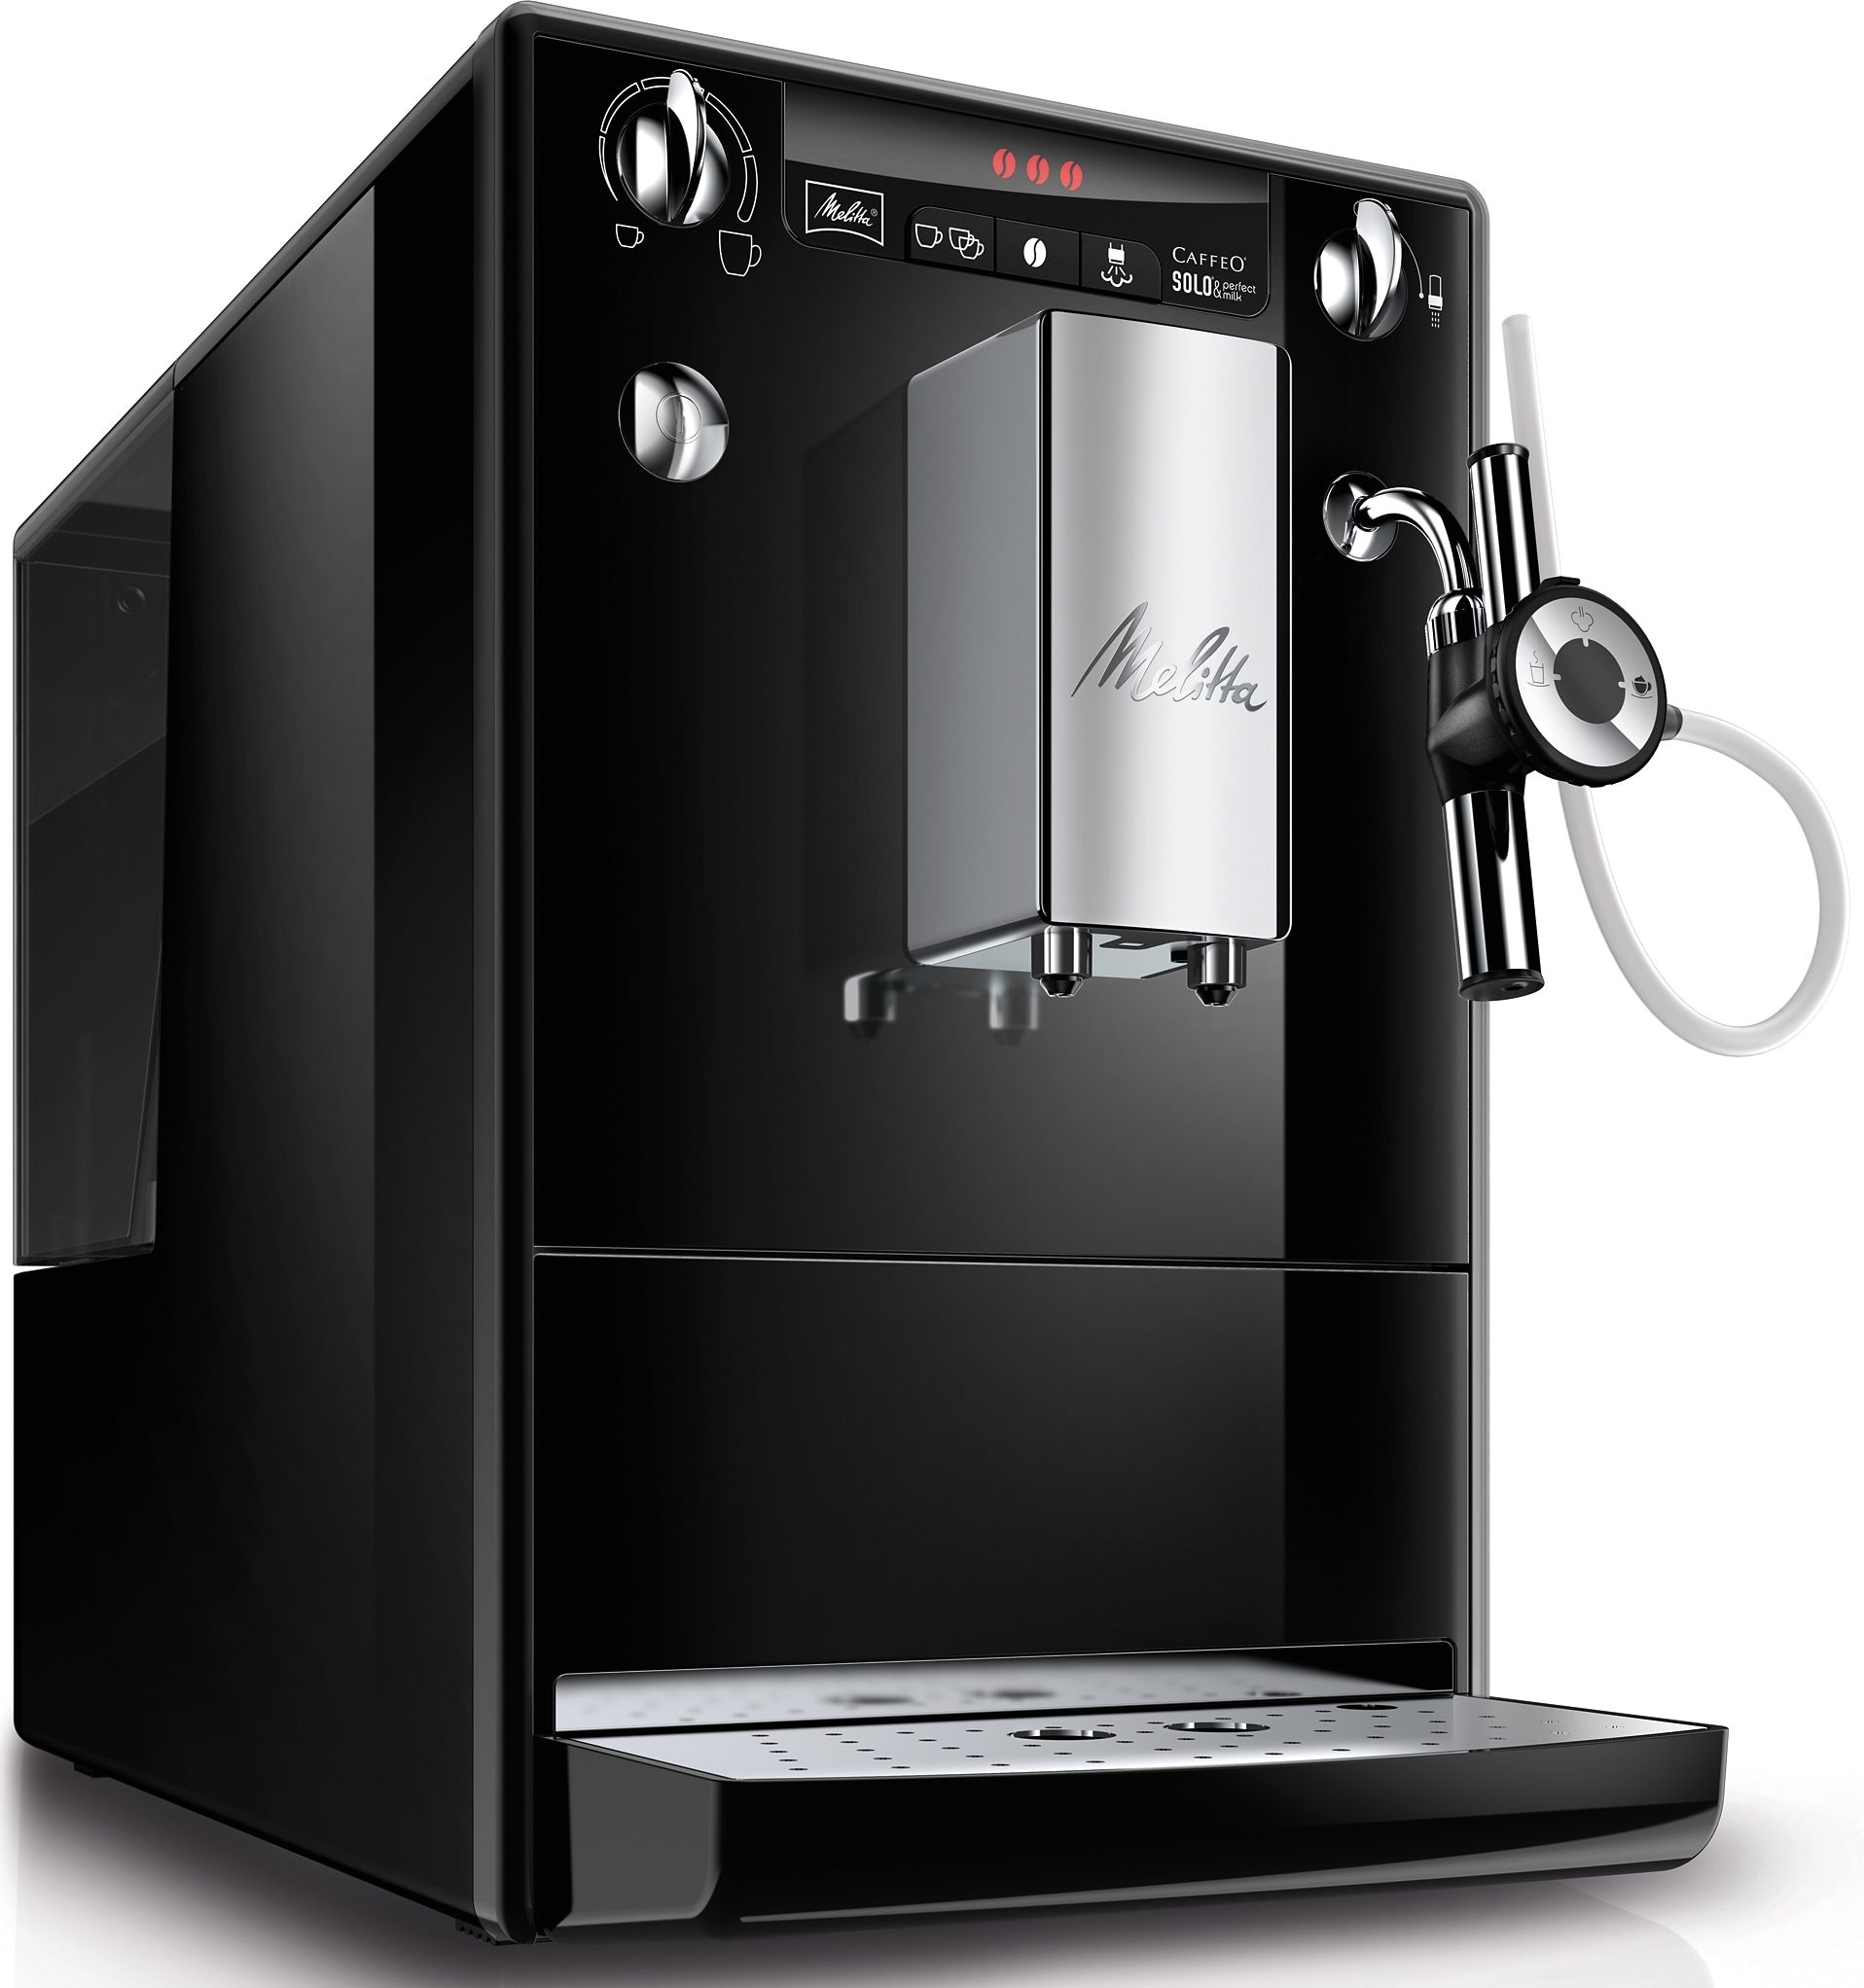 Melitta Kaffeevollautomat Milk »Solo® BAUR Touch, One E per crème&Espresso & Milch schwarz«, Drehregler | Perfect Café Milchsch&heiße 957-201, per